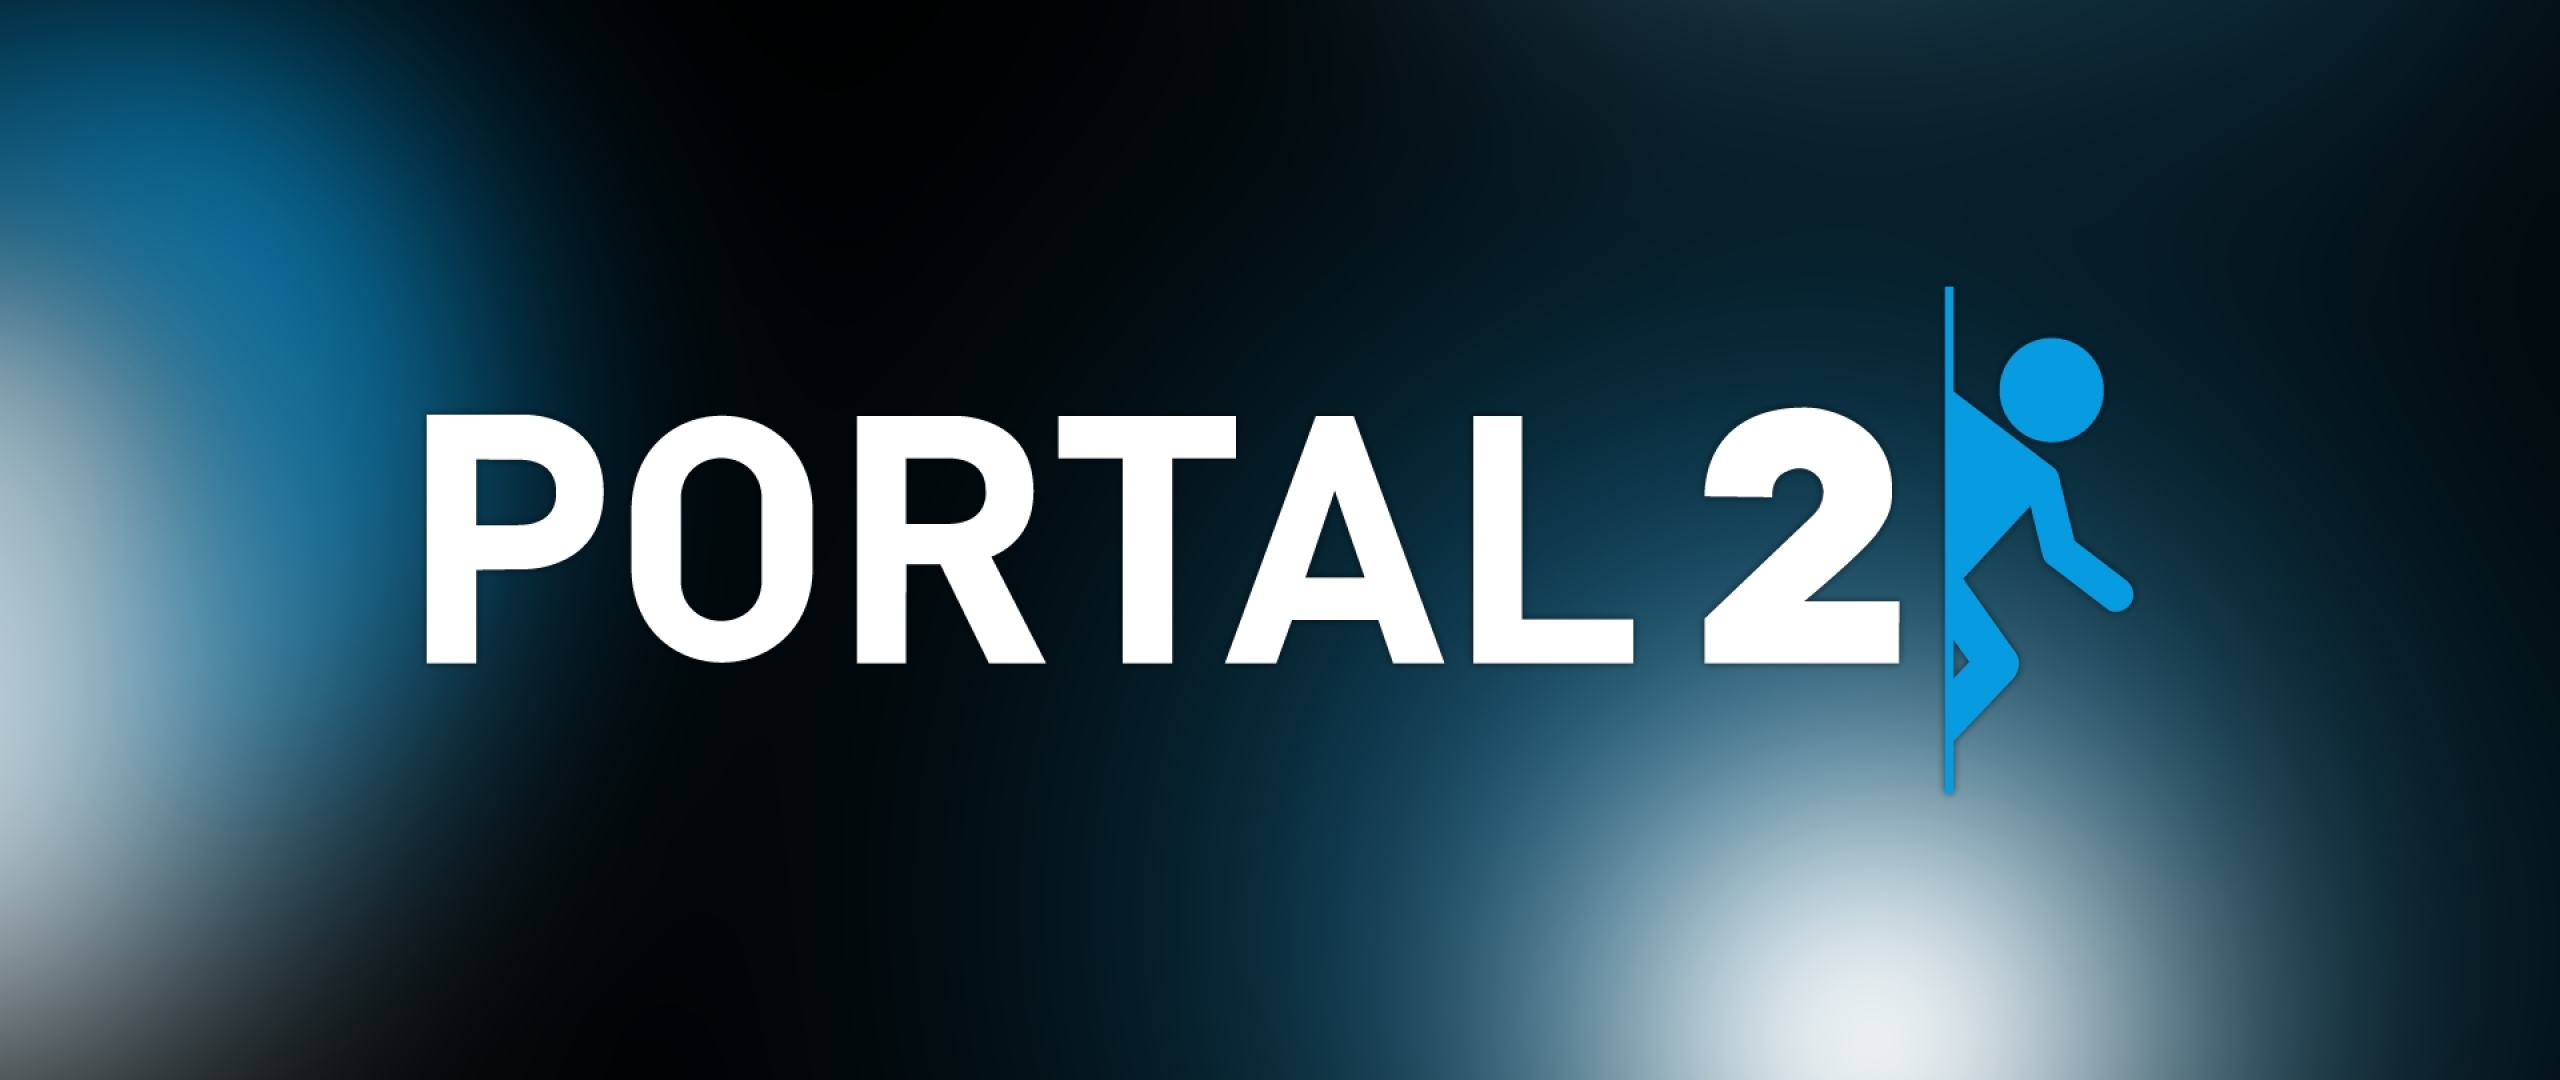 Portal 2 for windows 10 фото 115